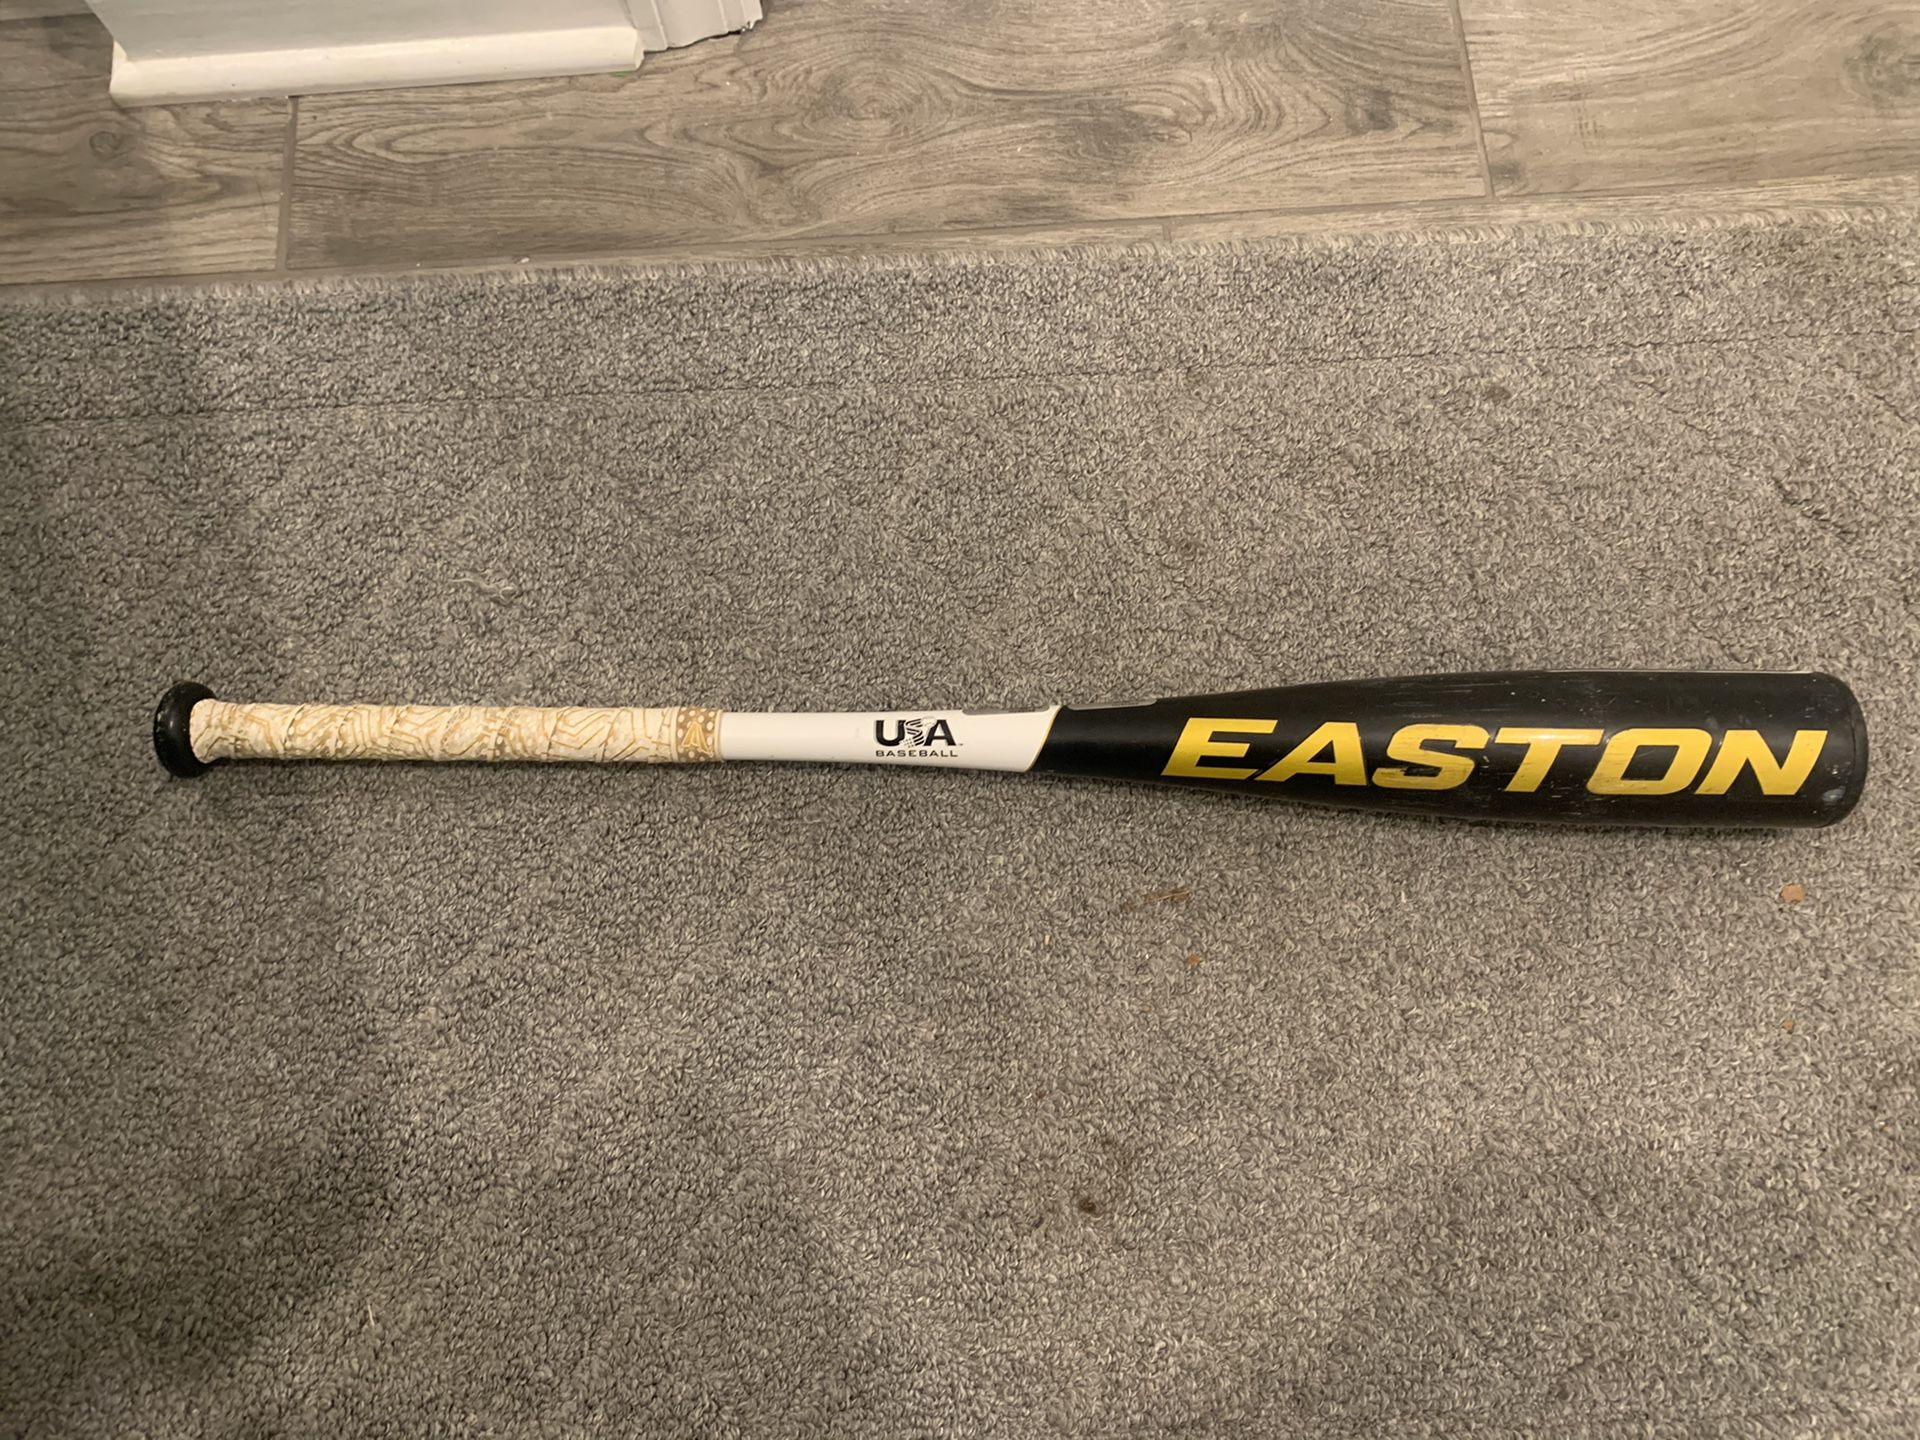 28 inch Easton beast baseball bat